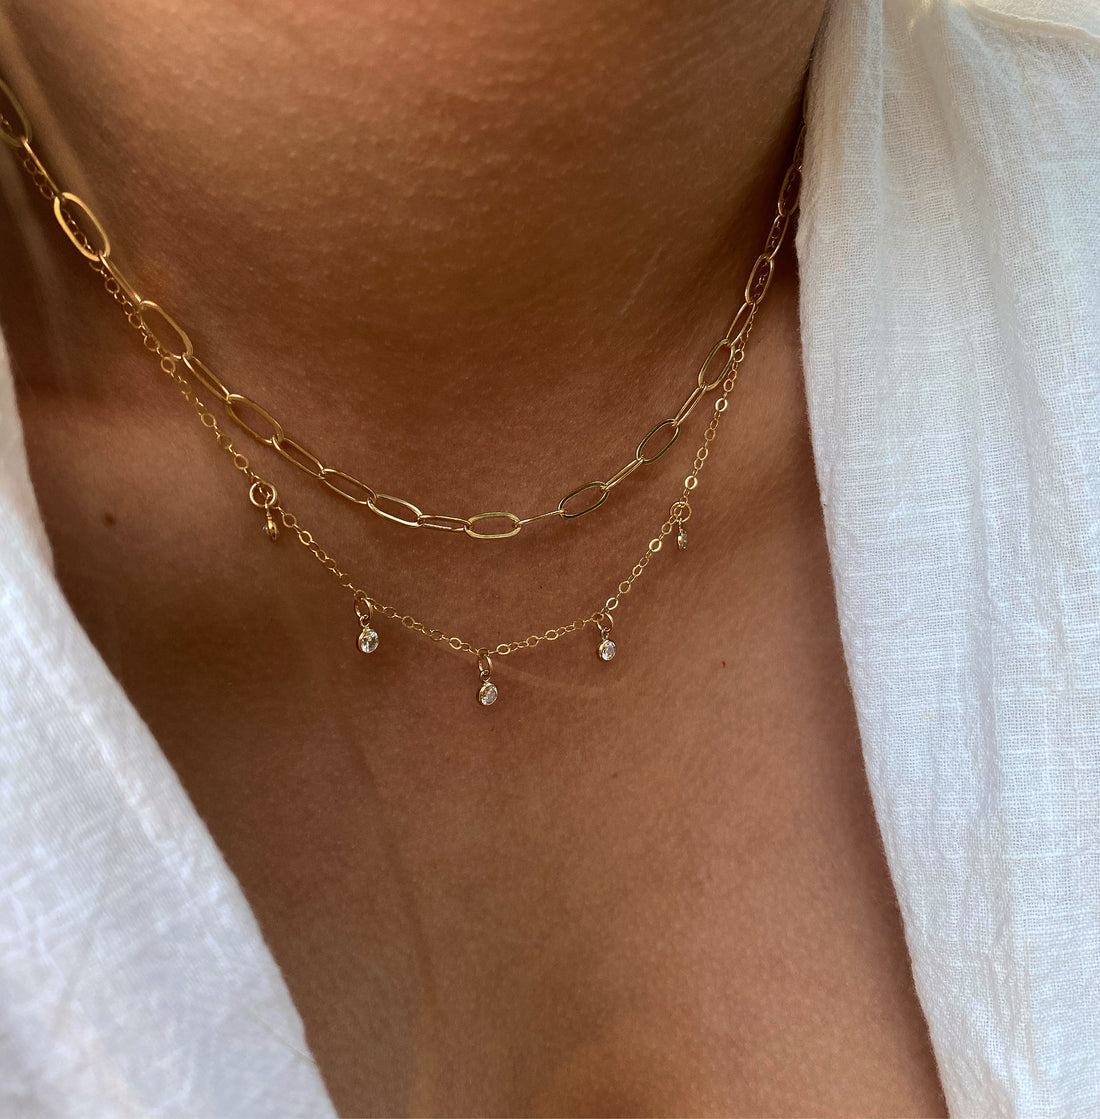 Lola Crystal Drop Necklace - Gold, Silver >>